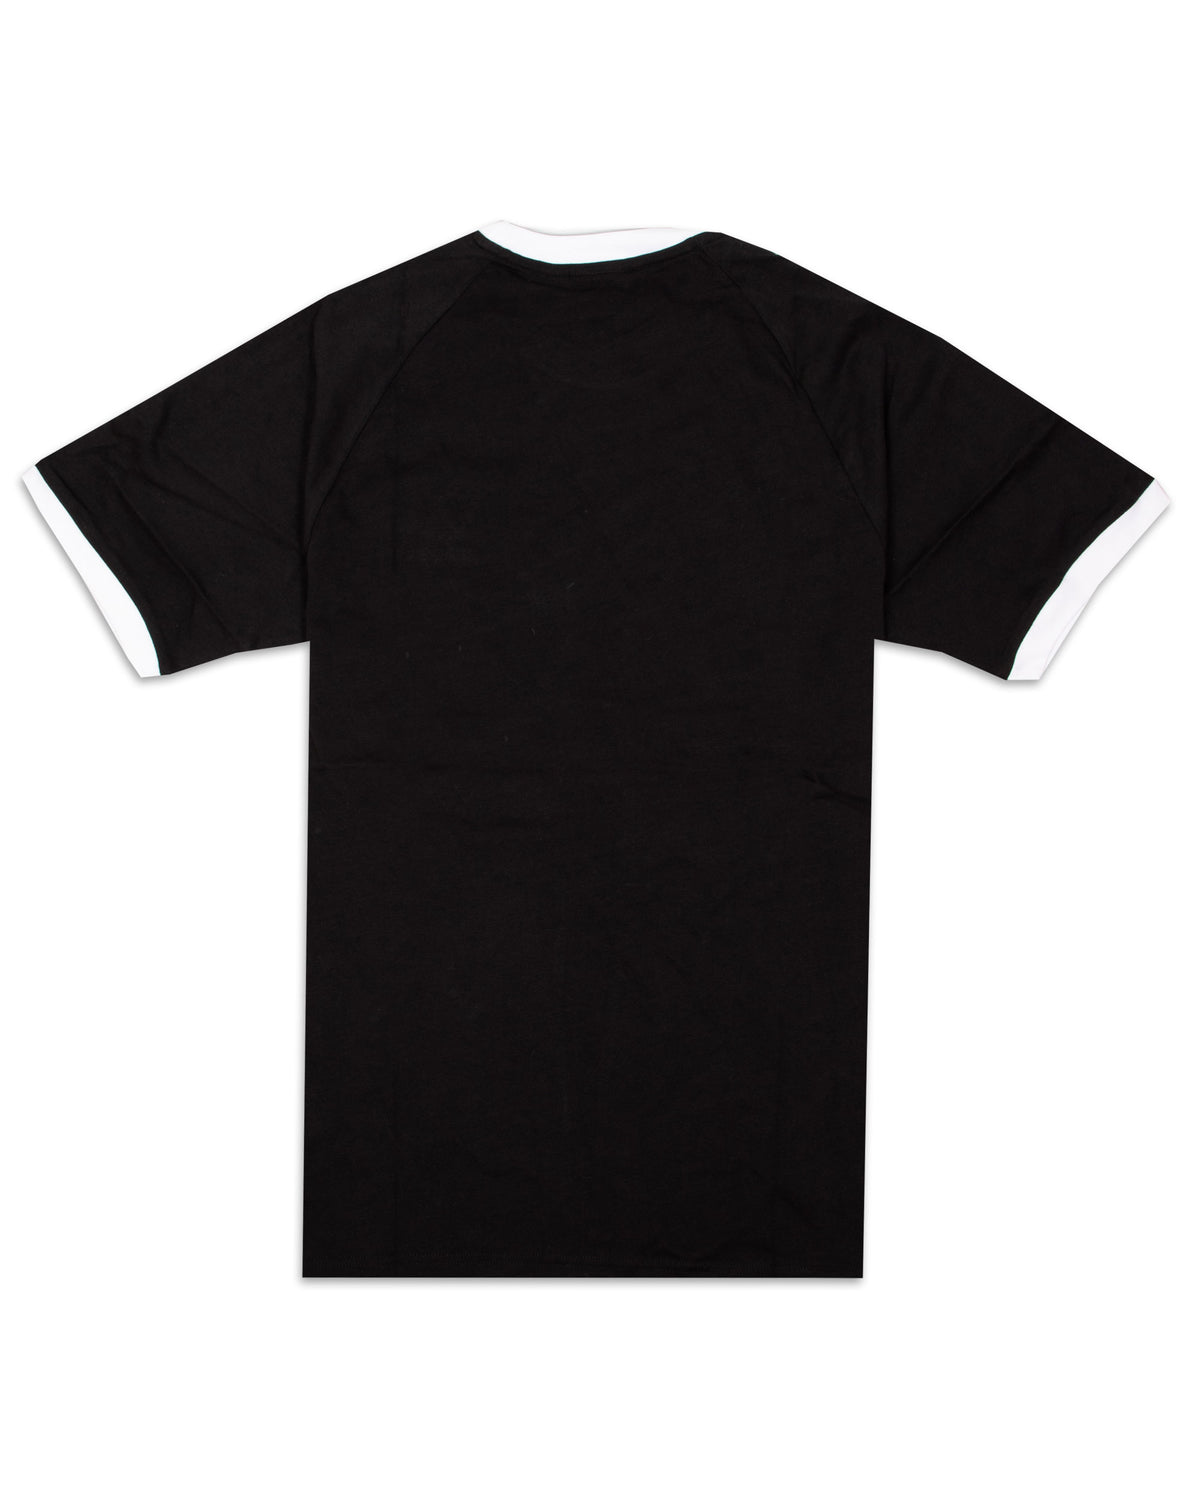 T-Shirt Uomo Adidas 3 Stripes Nero